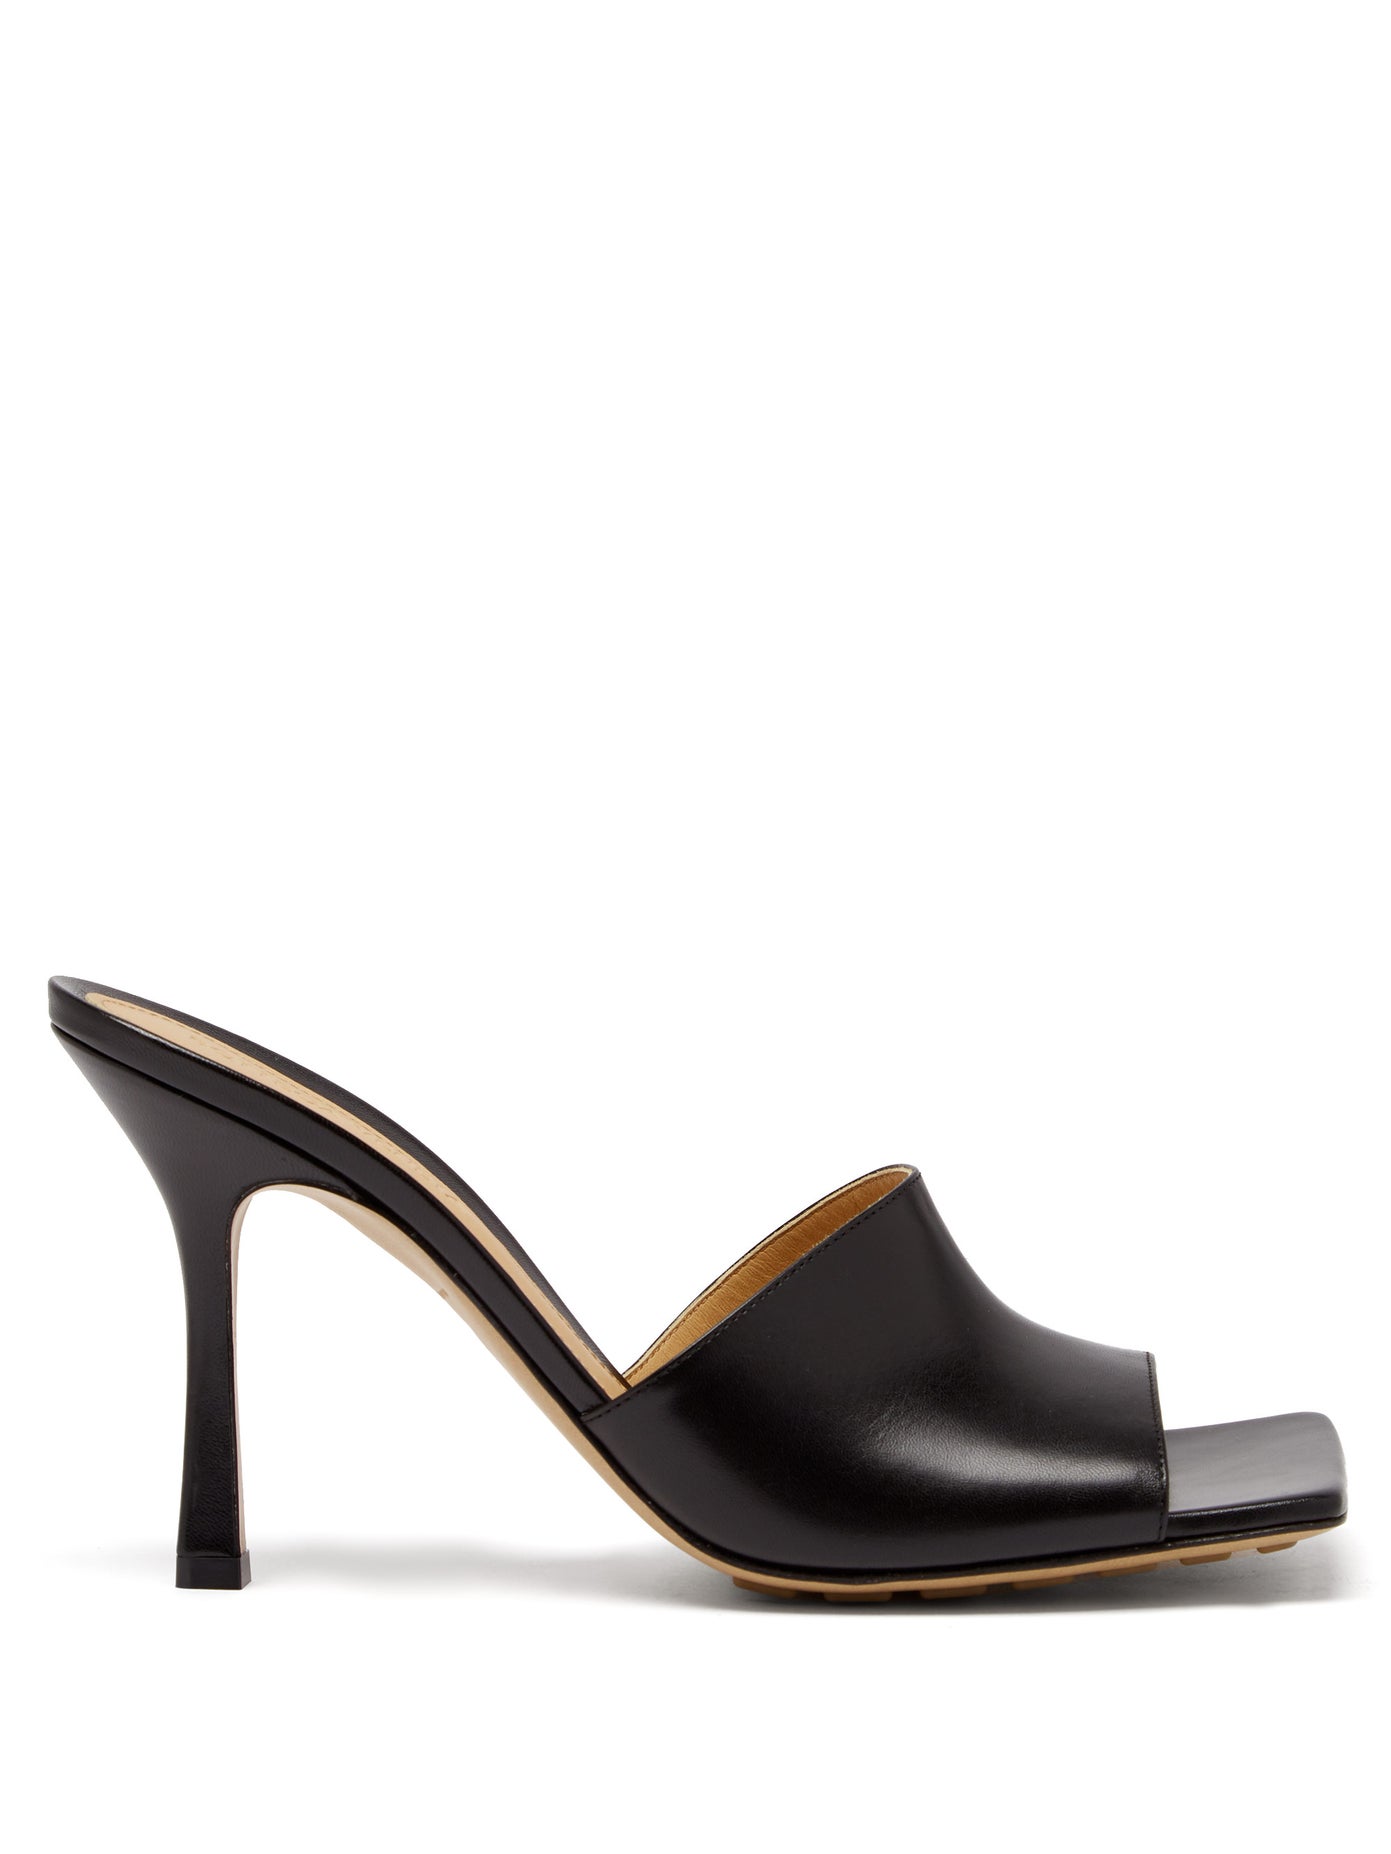 BEYONE-61 New Fashion 5 inch High Heel 1" Platform Women Party Shoes Black 8.5 